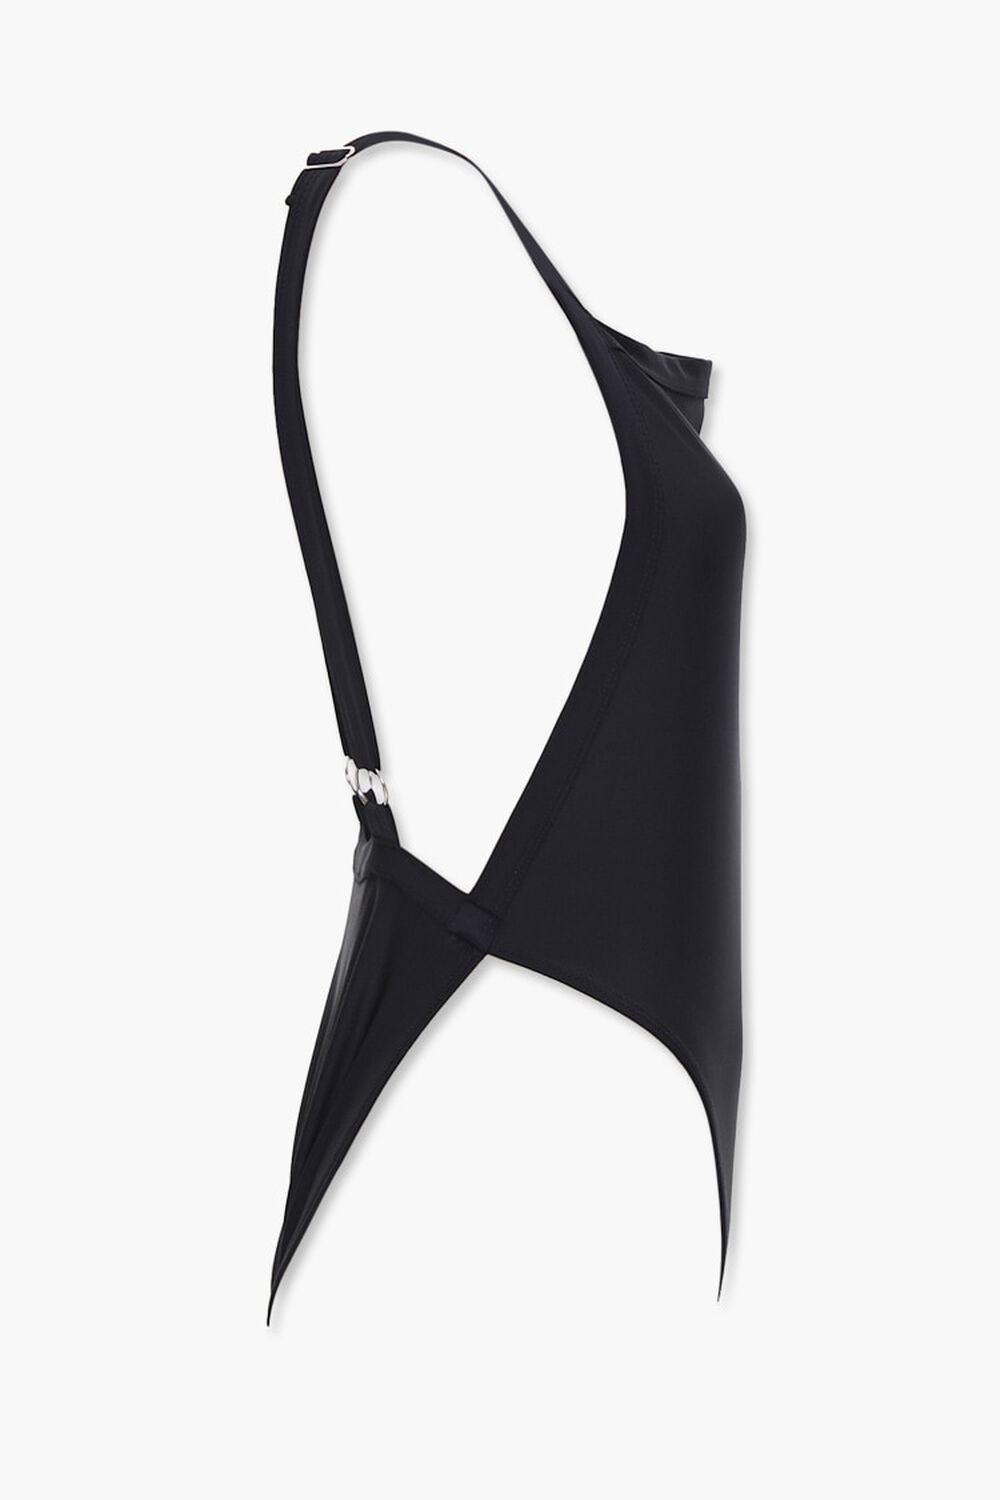 BLACK Cheeky Plunge-Back Bodysuit, image 2